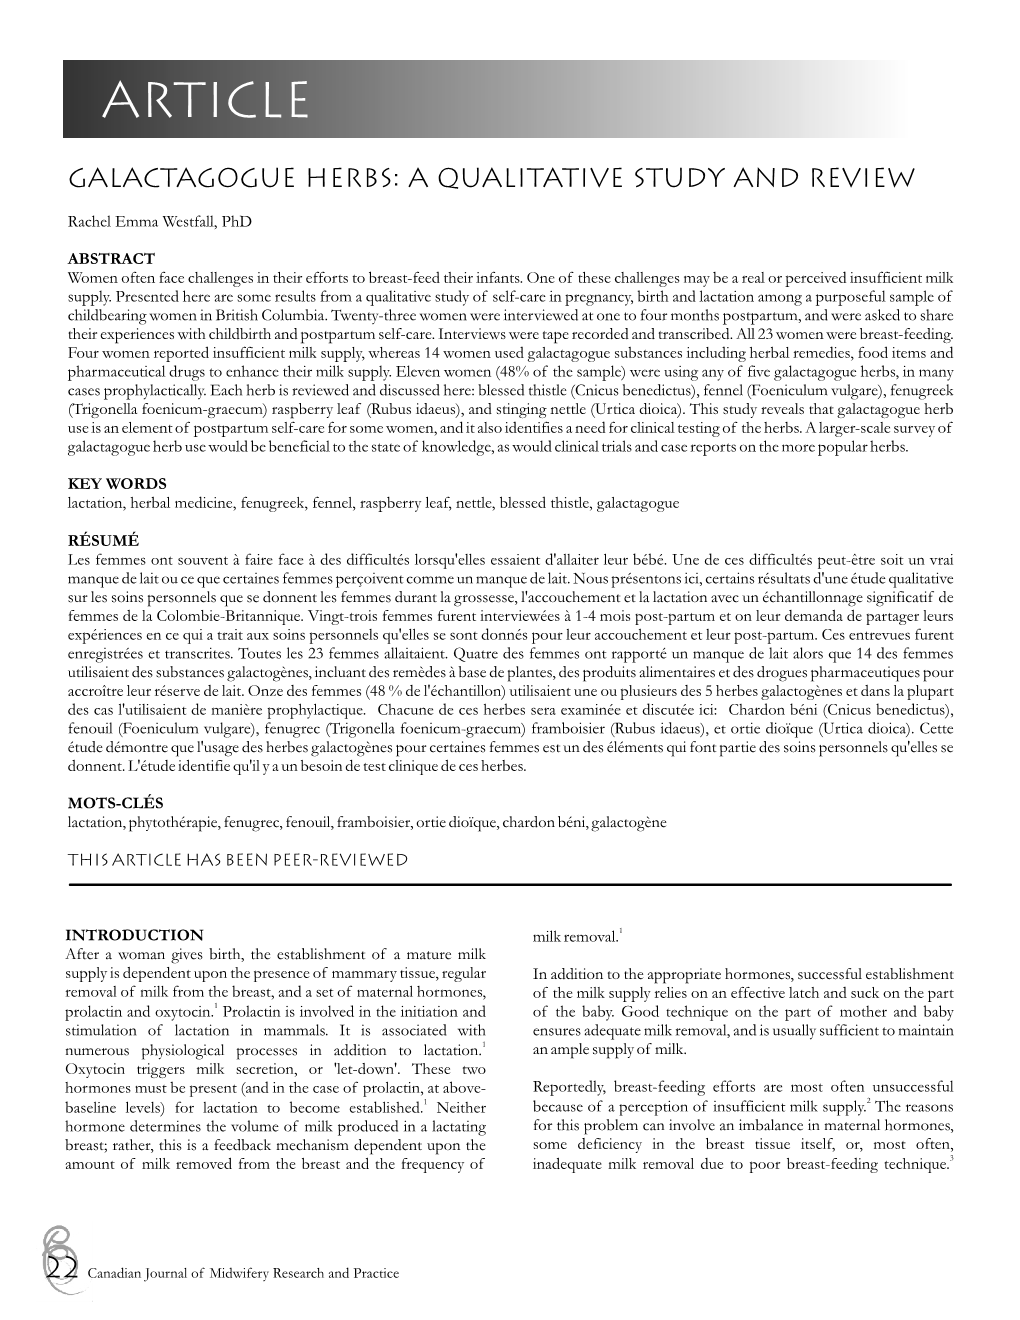 Galactagogue Herbs: a Qualitative Study and Review